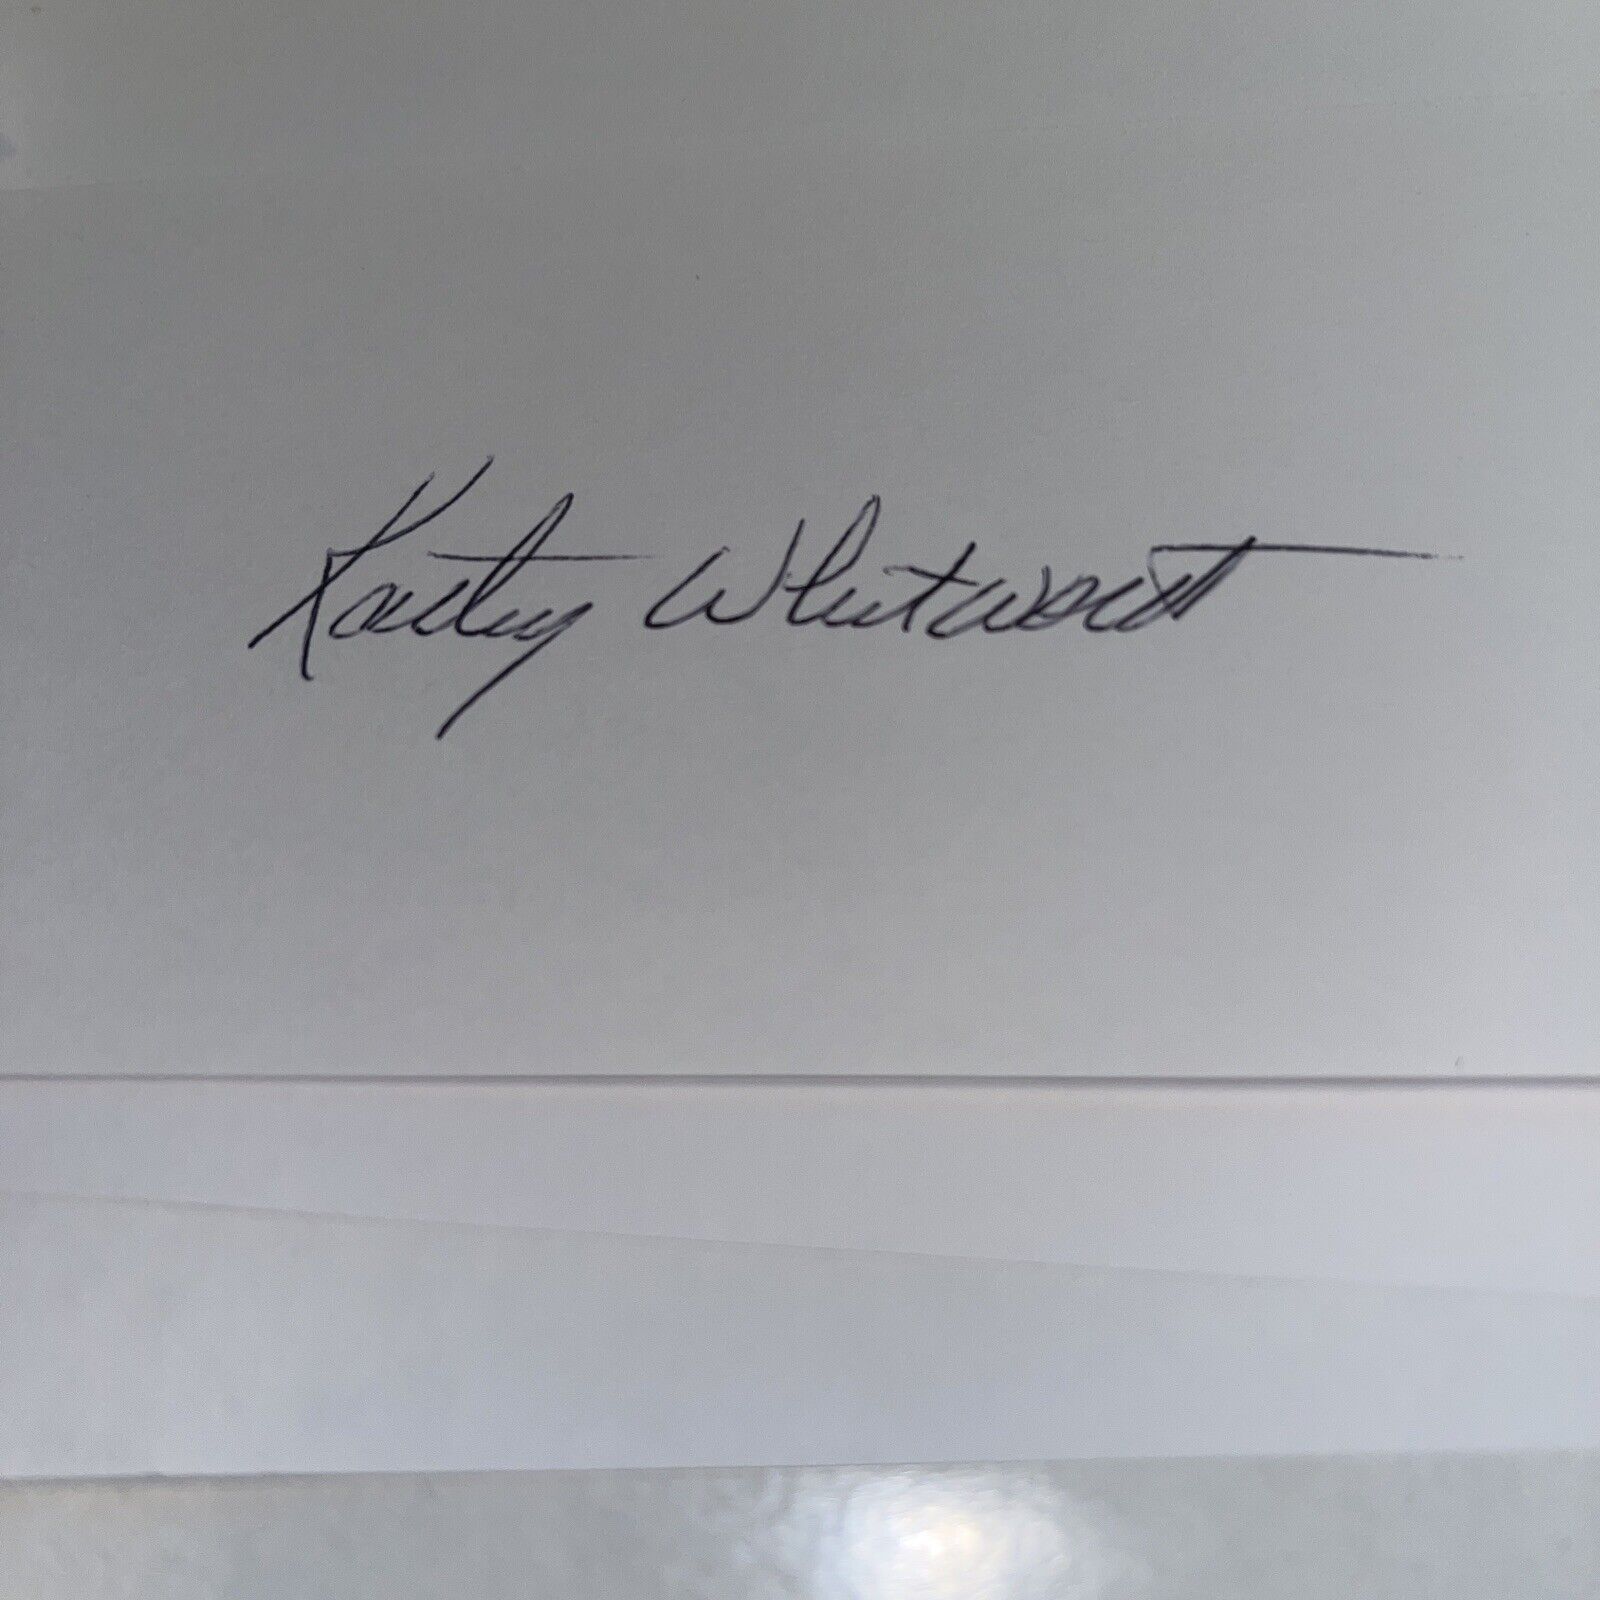 Kathy Whitworth Hofer Signed  3x5 Index Card